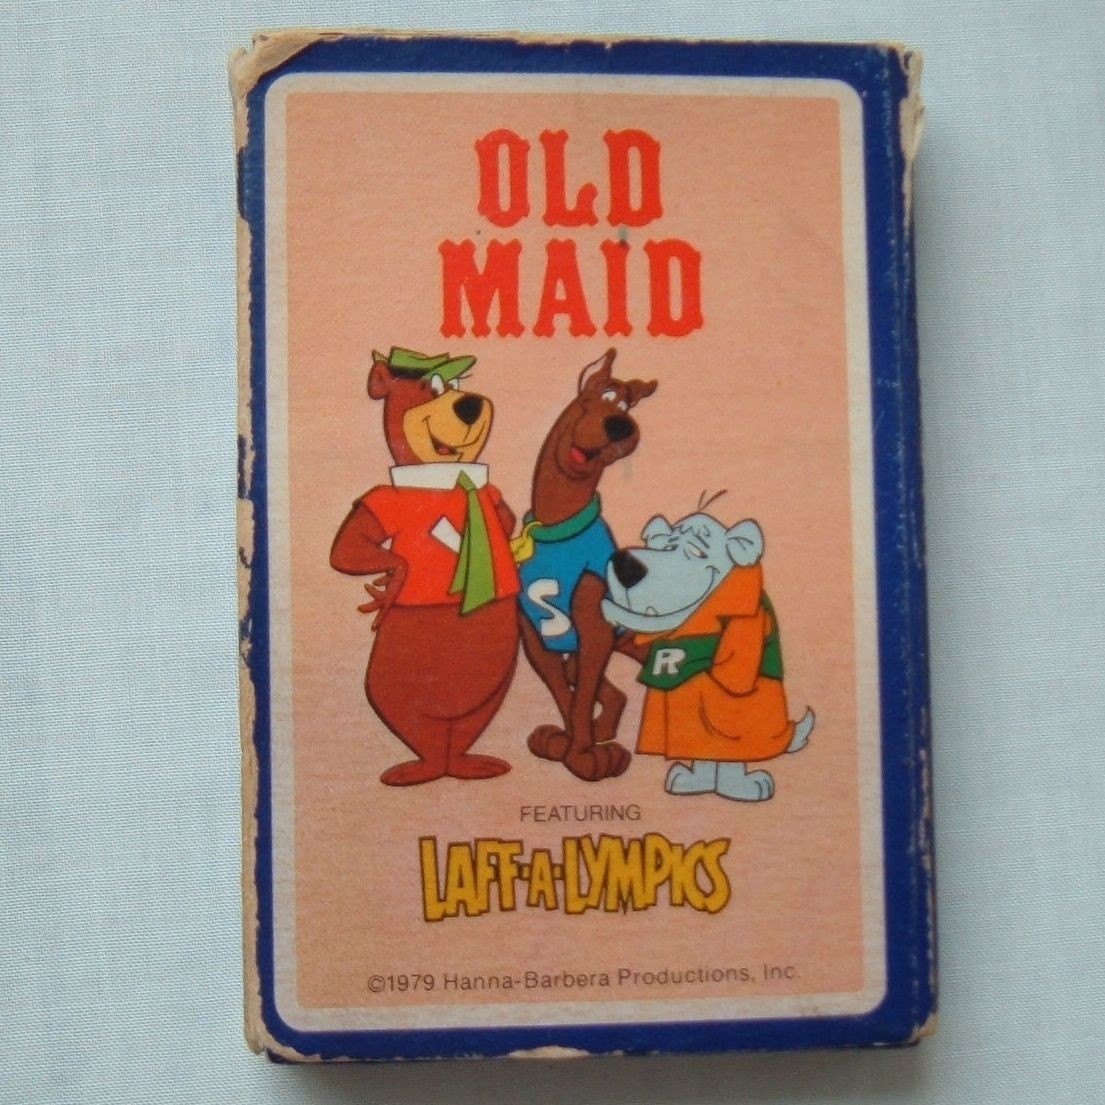 laminated old maid card game